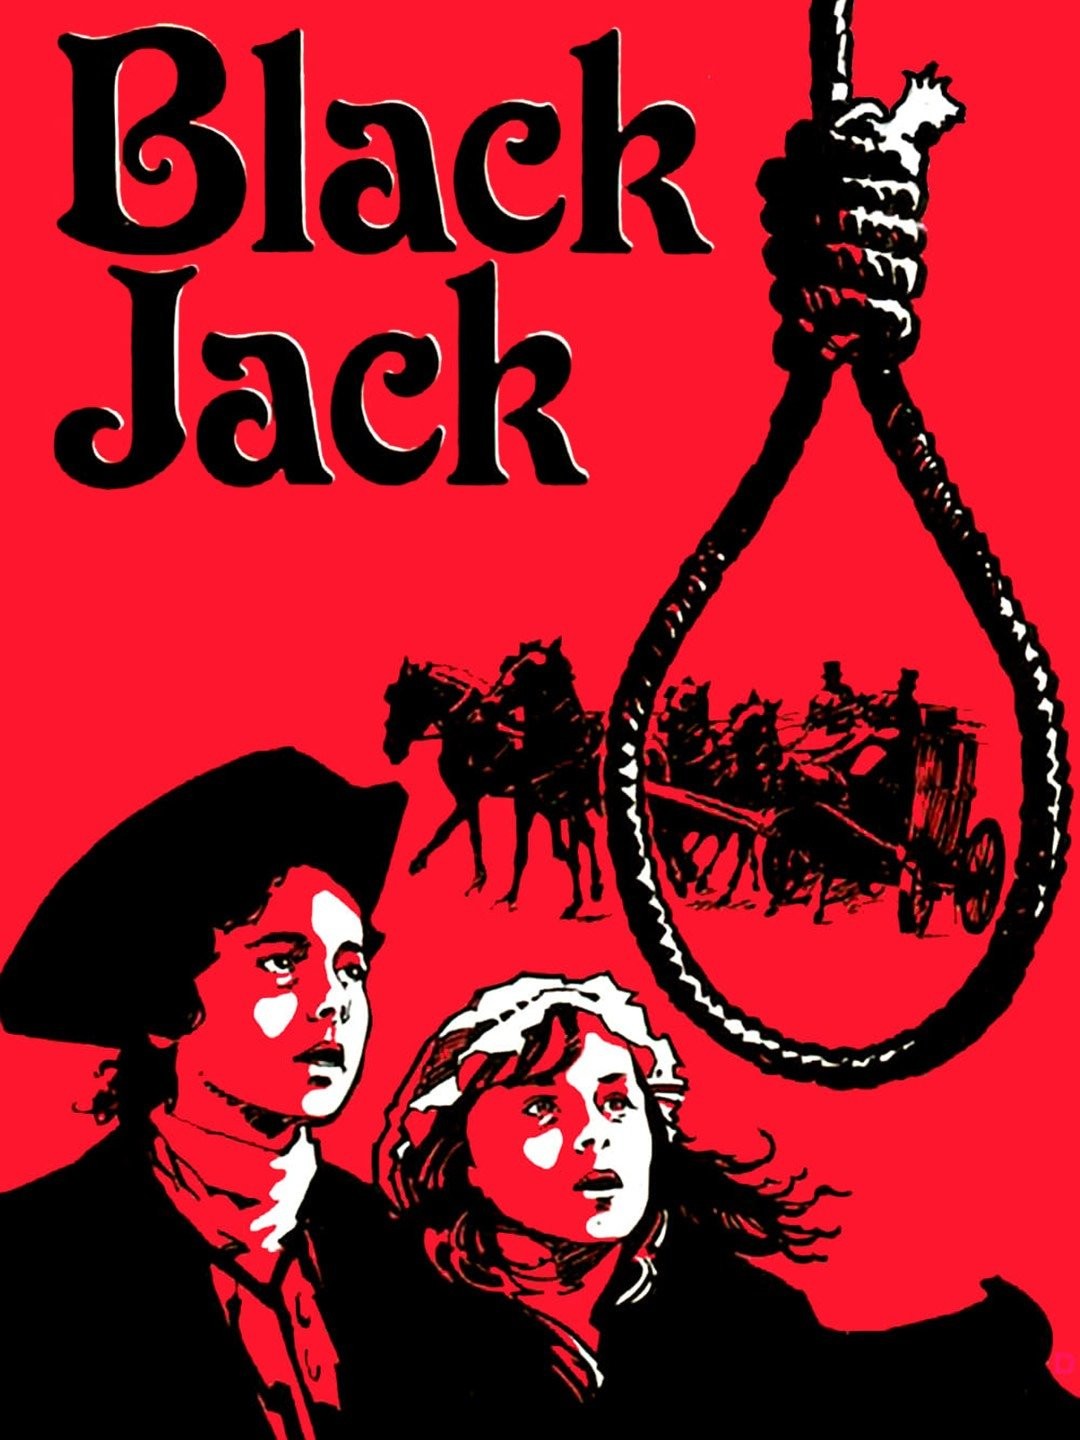 Foto de Jack Black - Poster Jack Black - Foto 167 de 270 - AdoroCinema